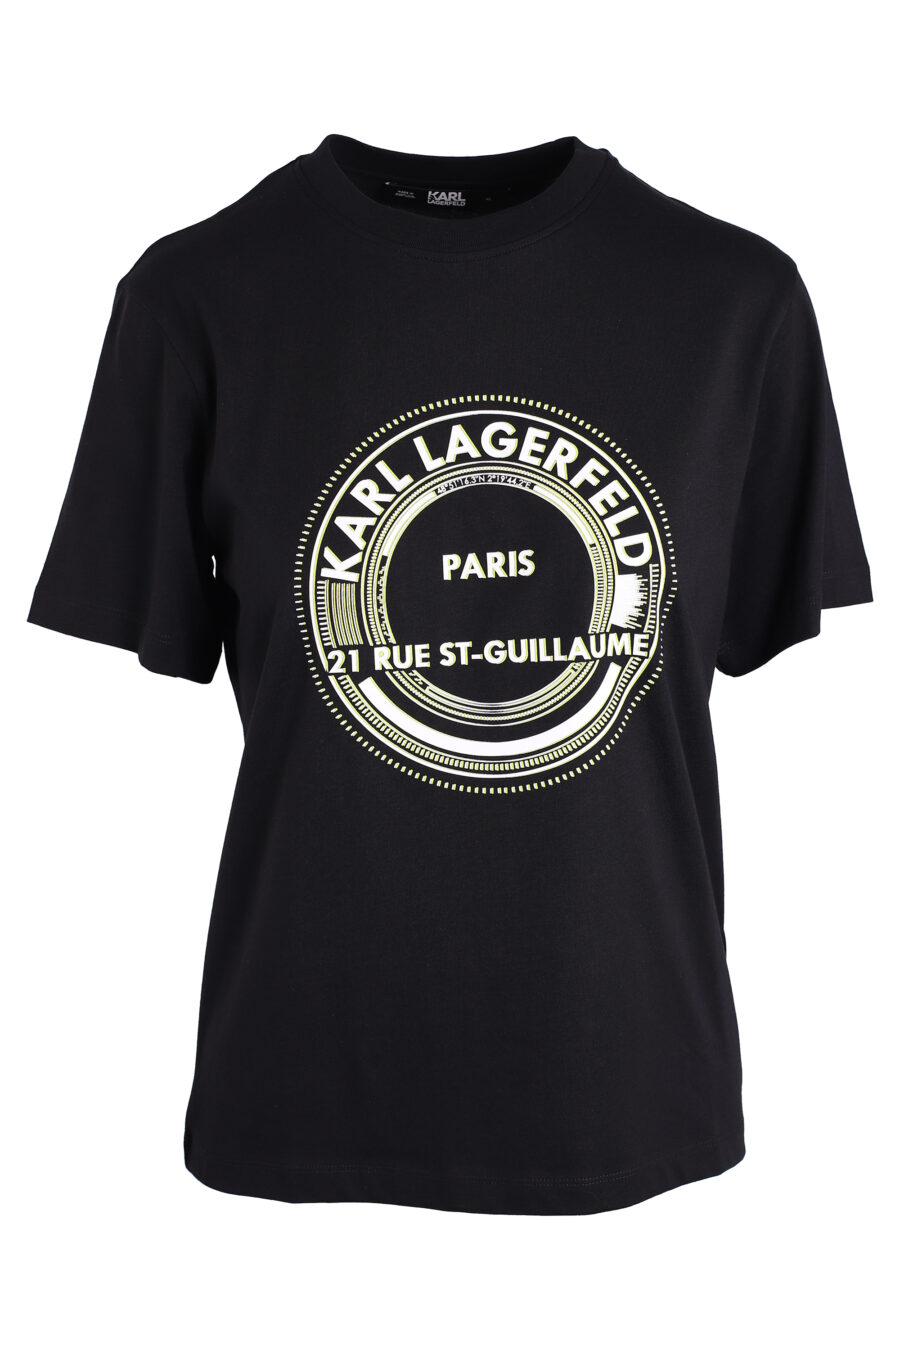 T-shirt black with round white and green "paris" logo - IMG 3356